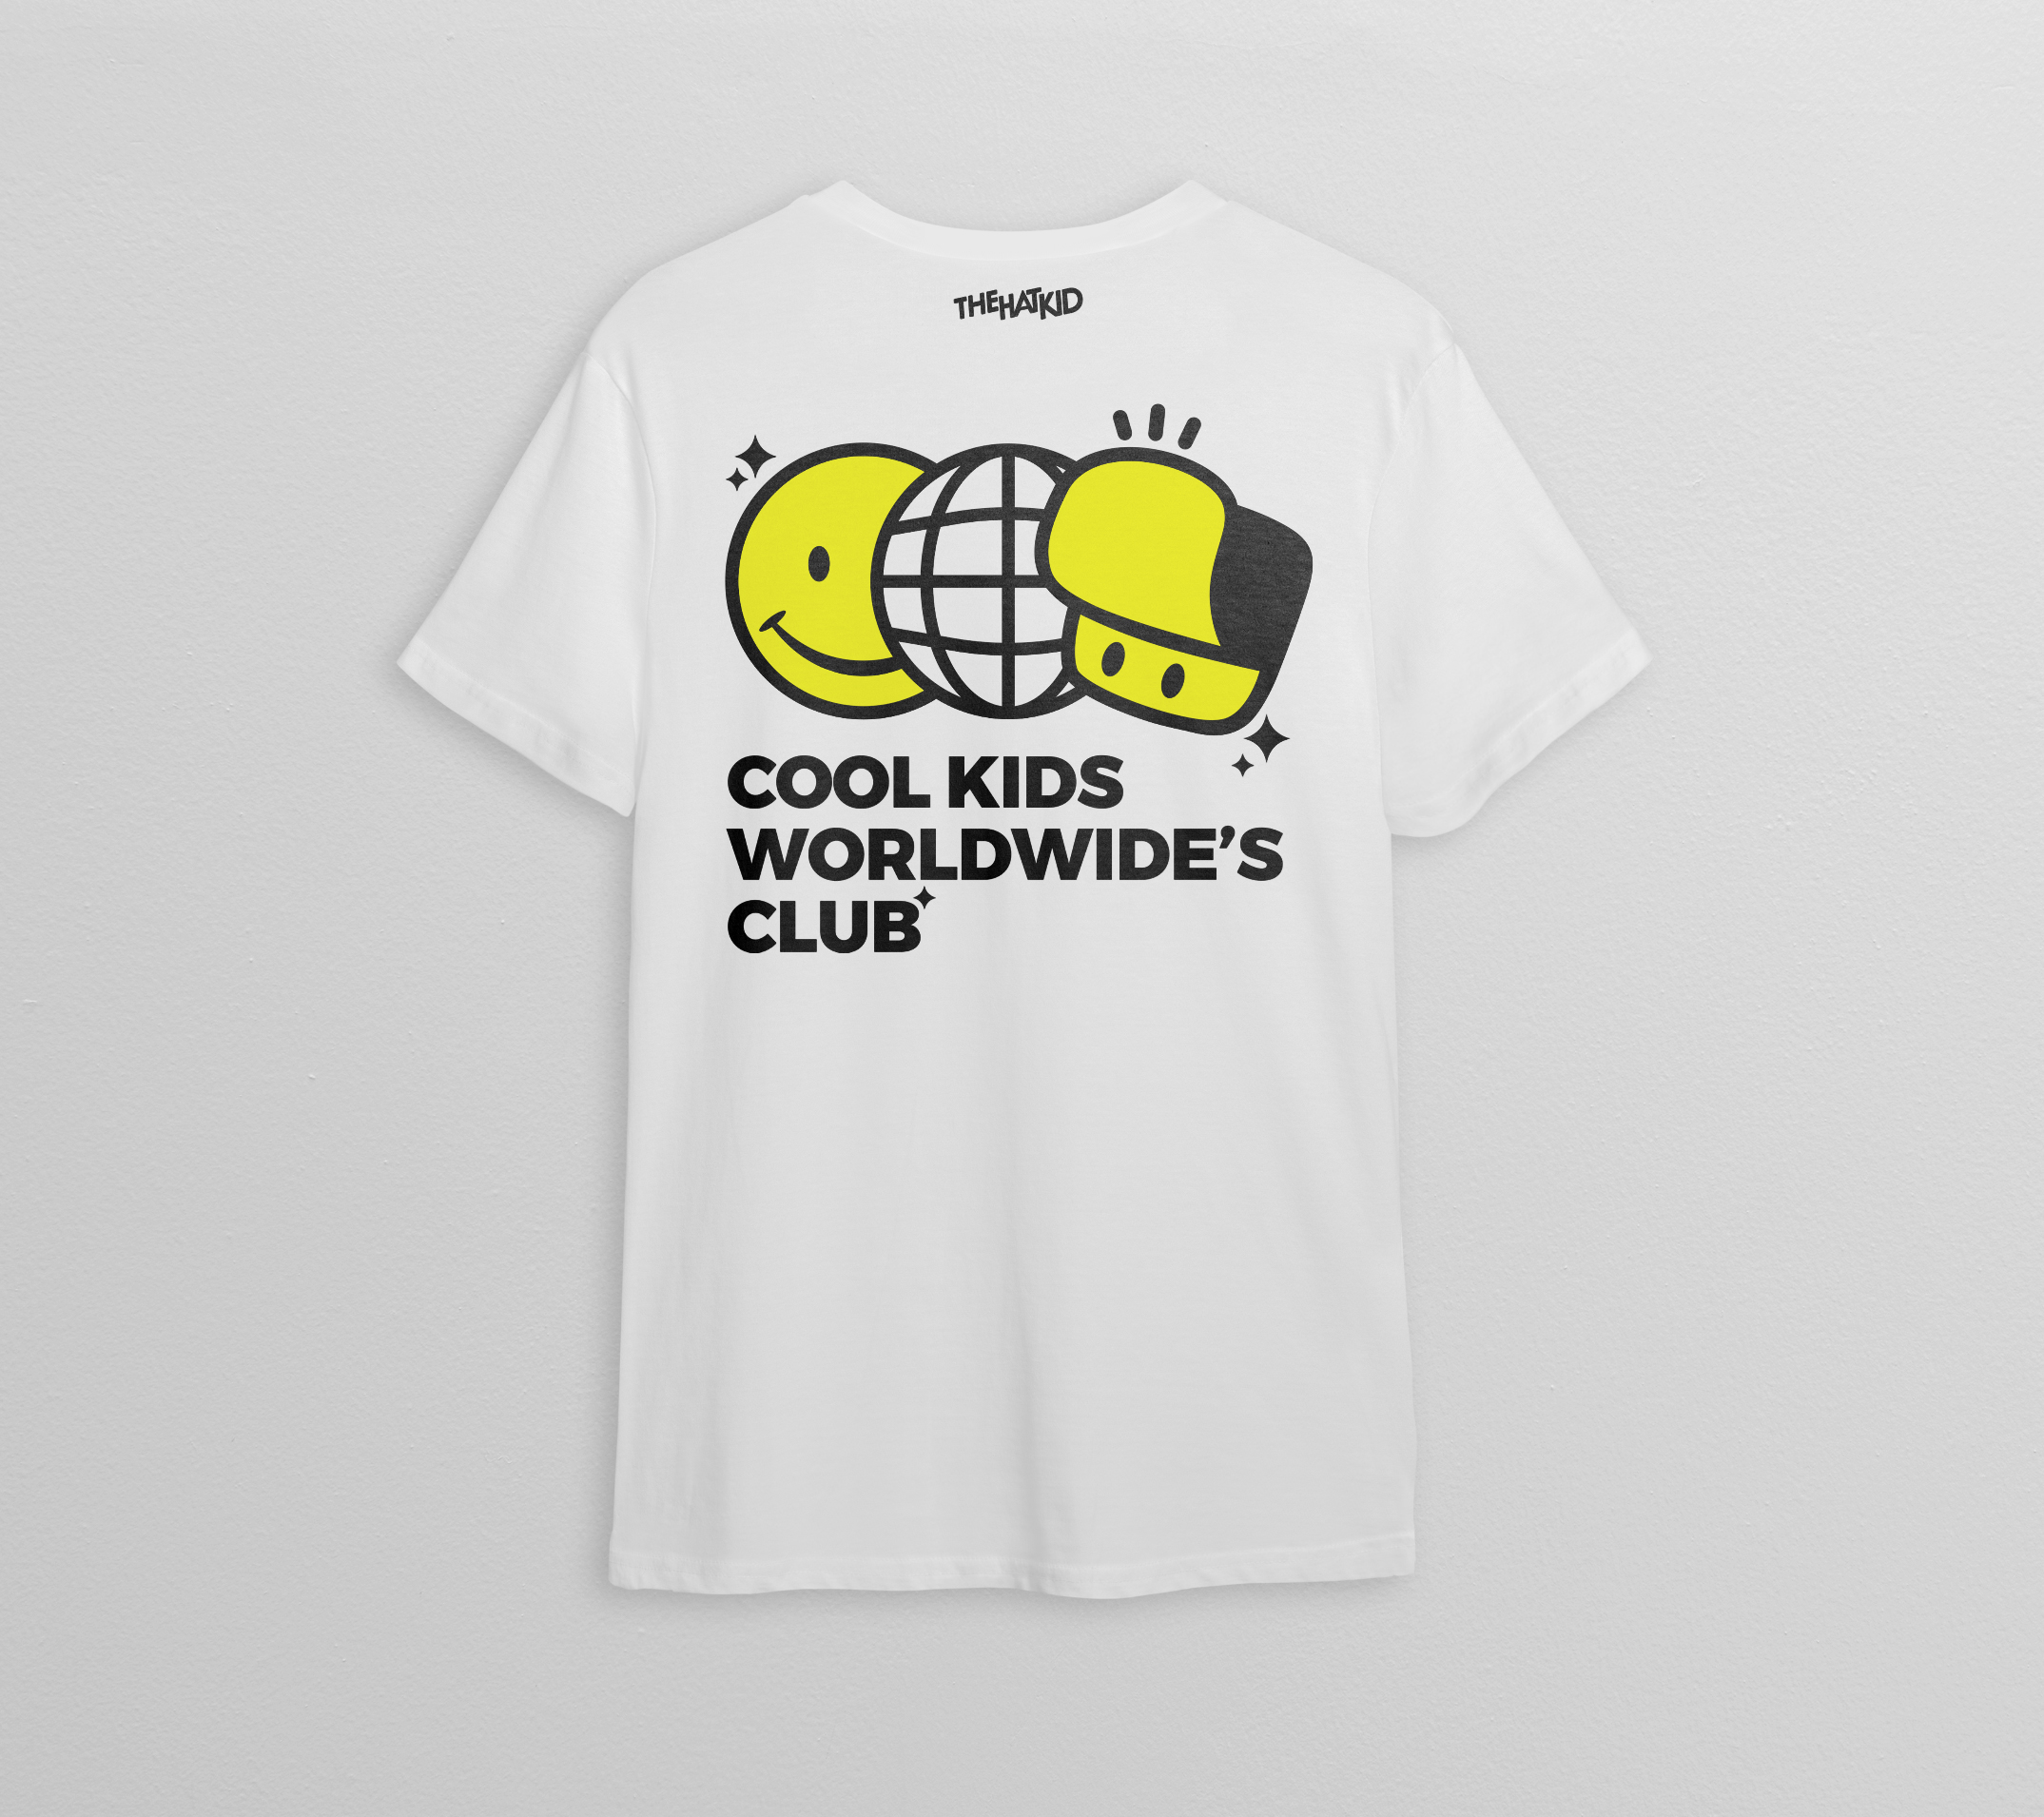 COOL KIDS WORLDWIDE'S CLUB” T-Shirt – THE